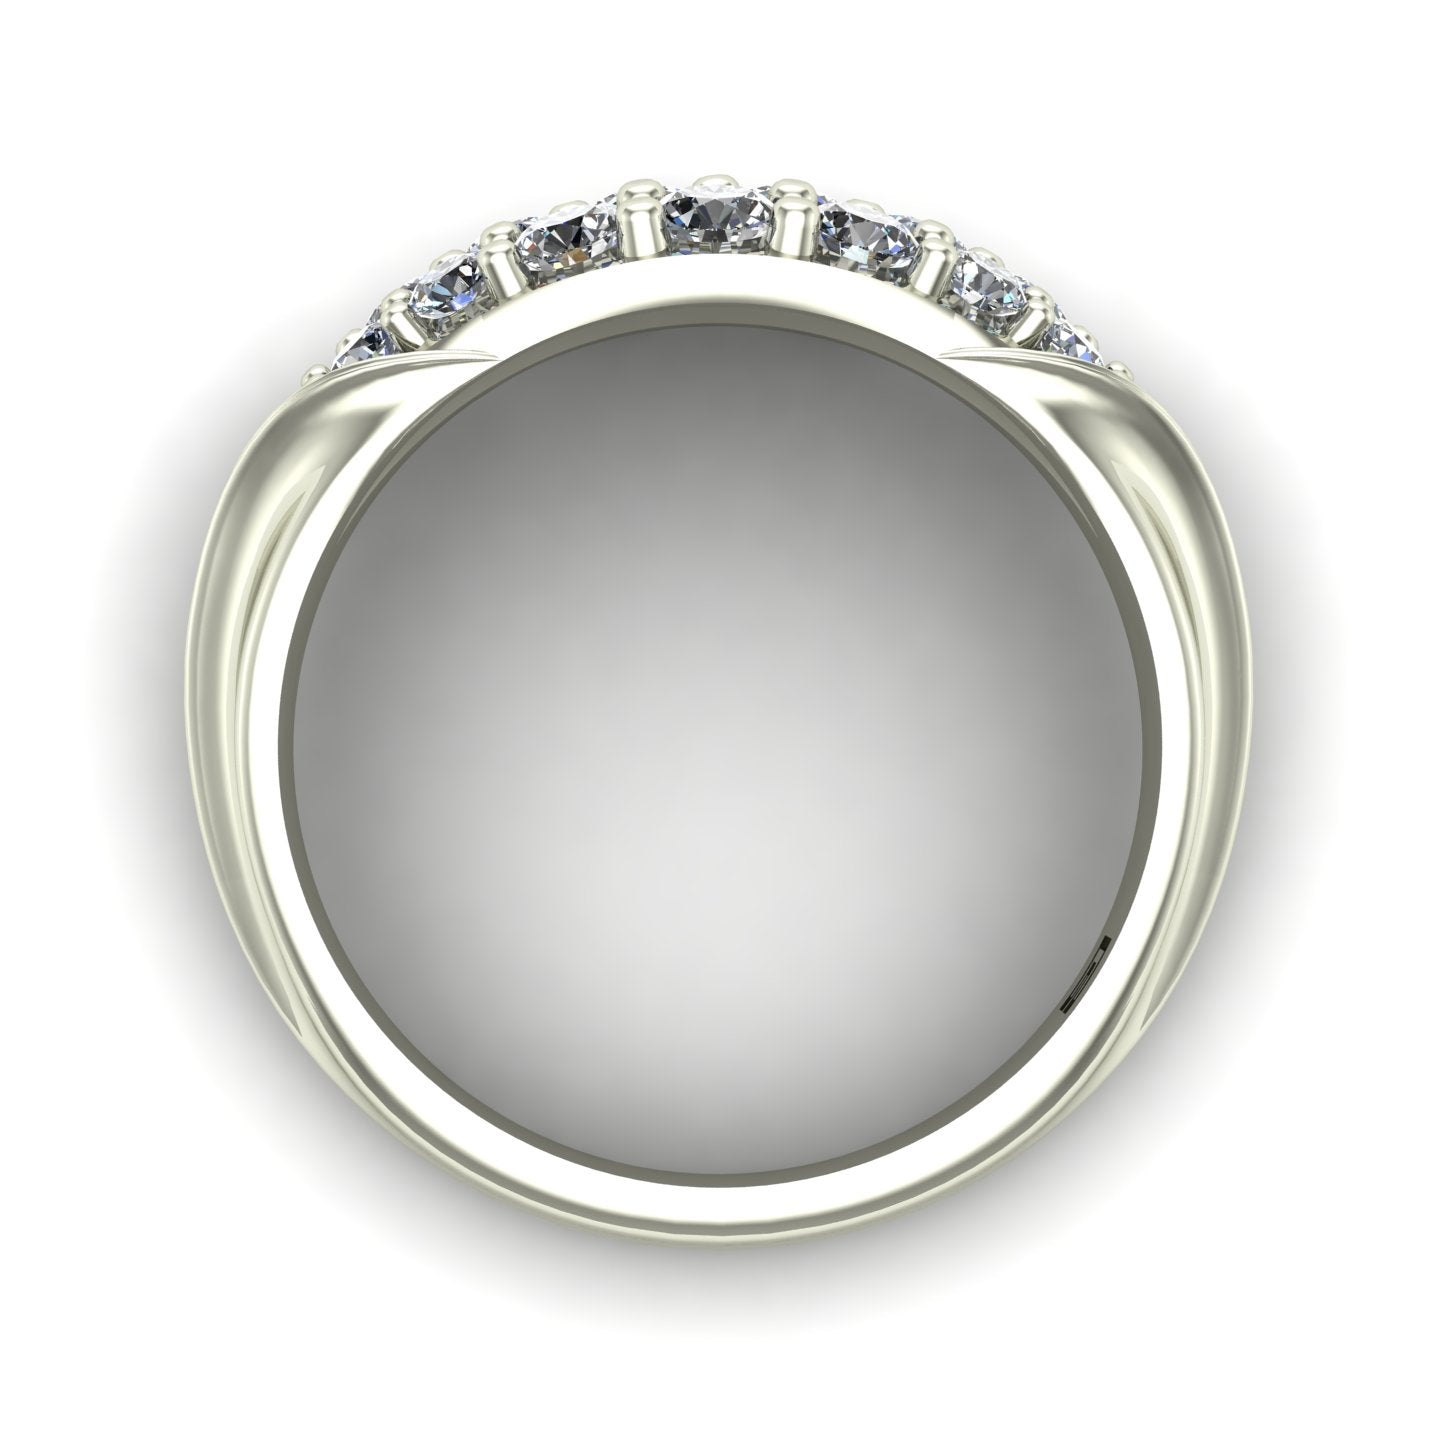 One carat diamond pavé band in 14k white gold - Charles Babb Designs -through finger view